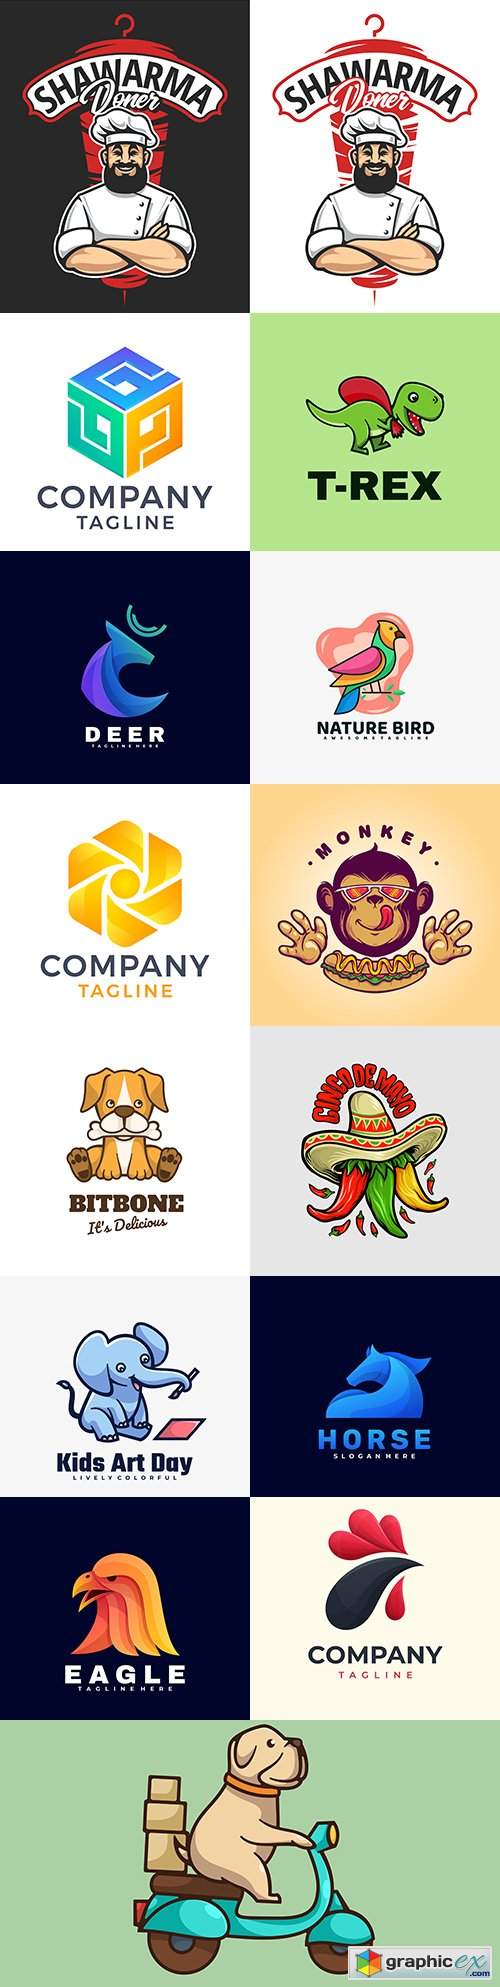  Brand name company logos business corporate design 45 